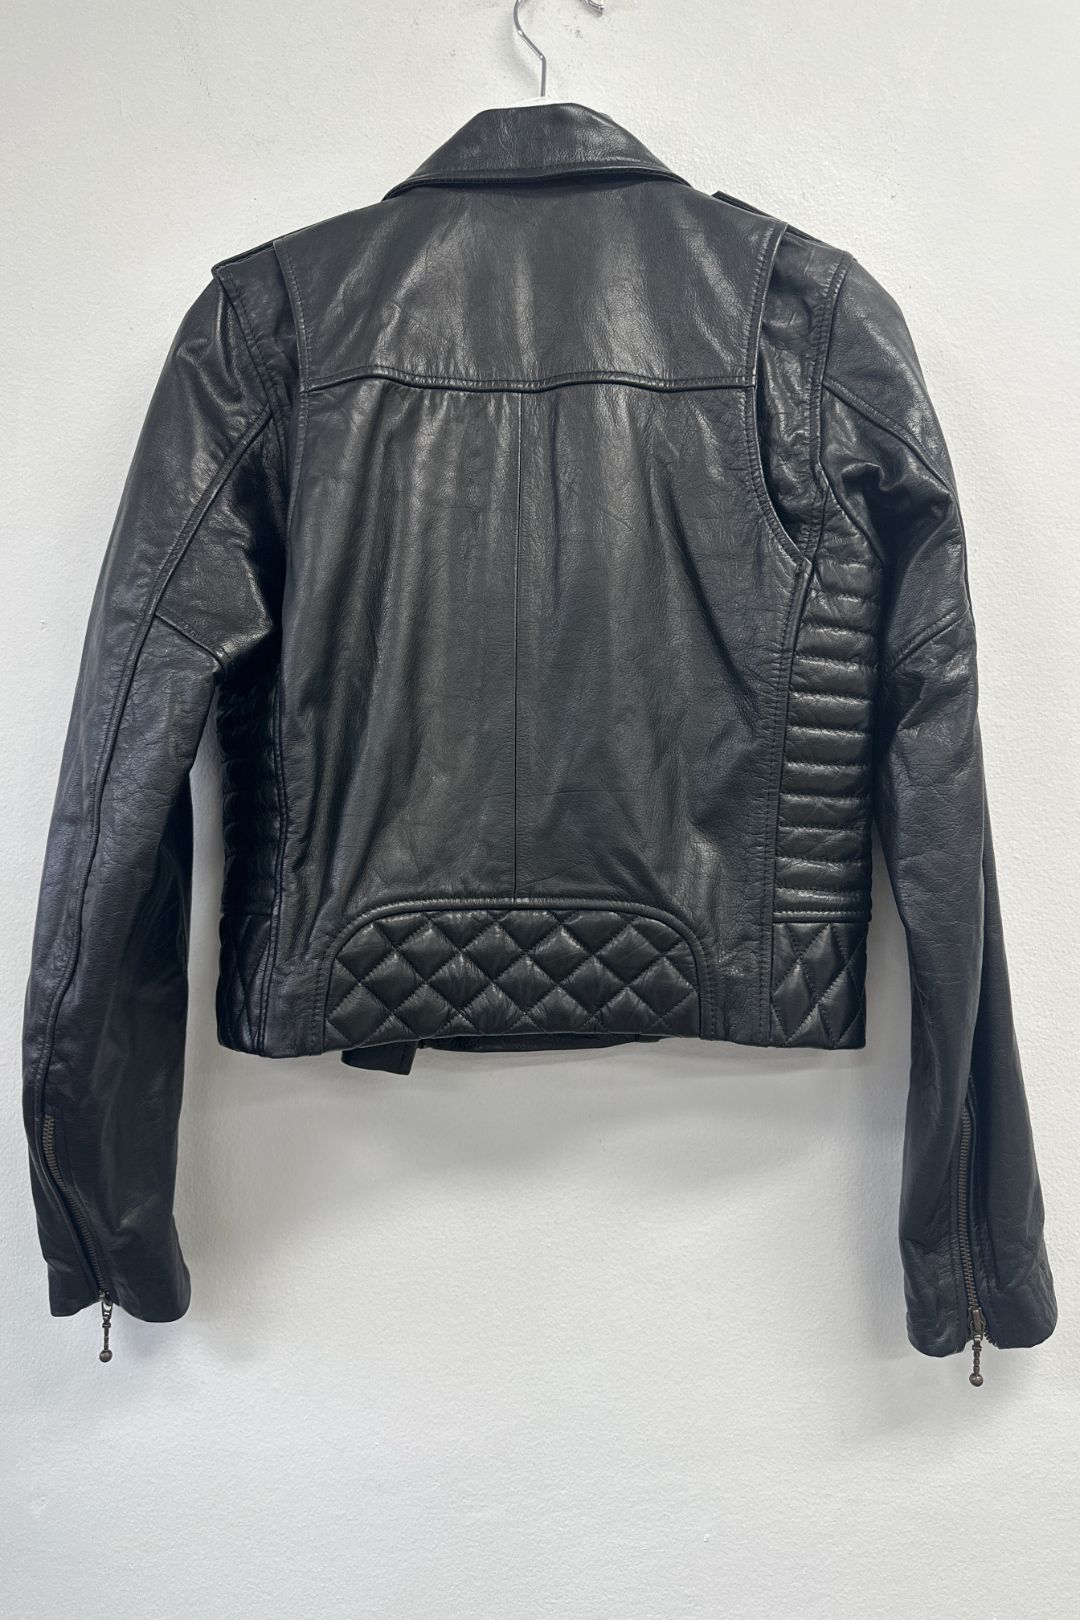 The Wanderers Travel Co Black Leather Viking Biker Jacket 